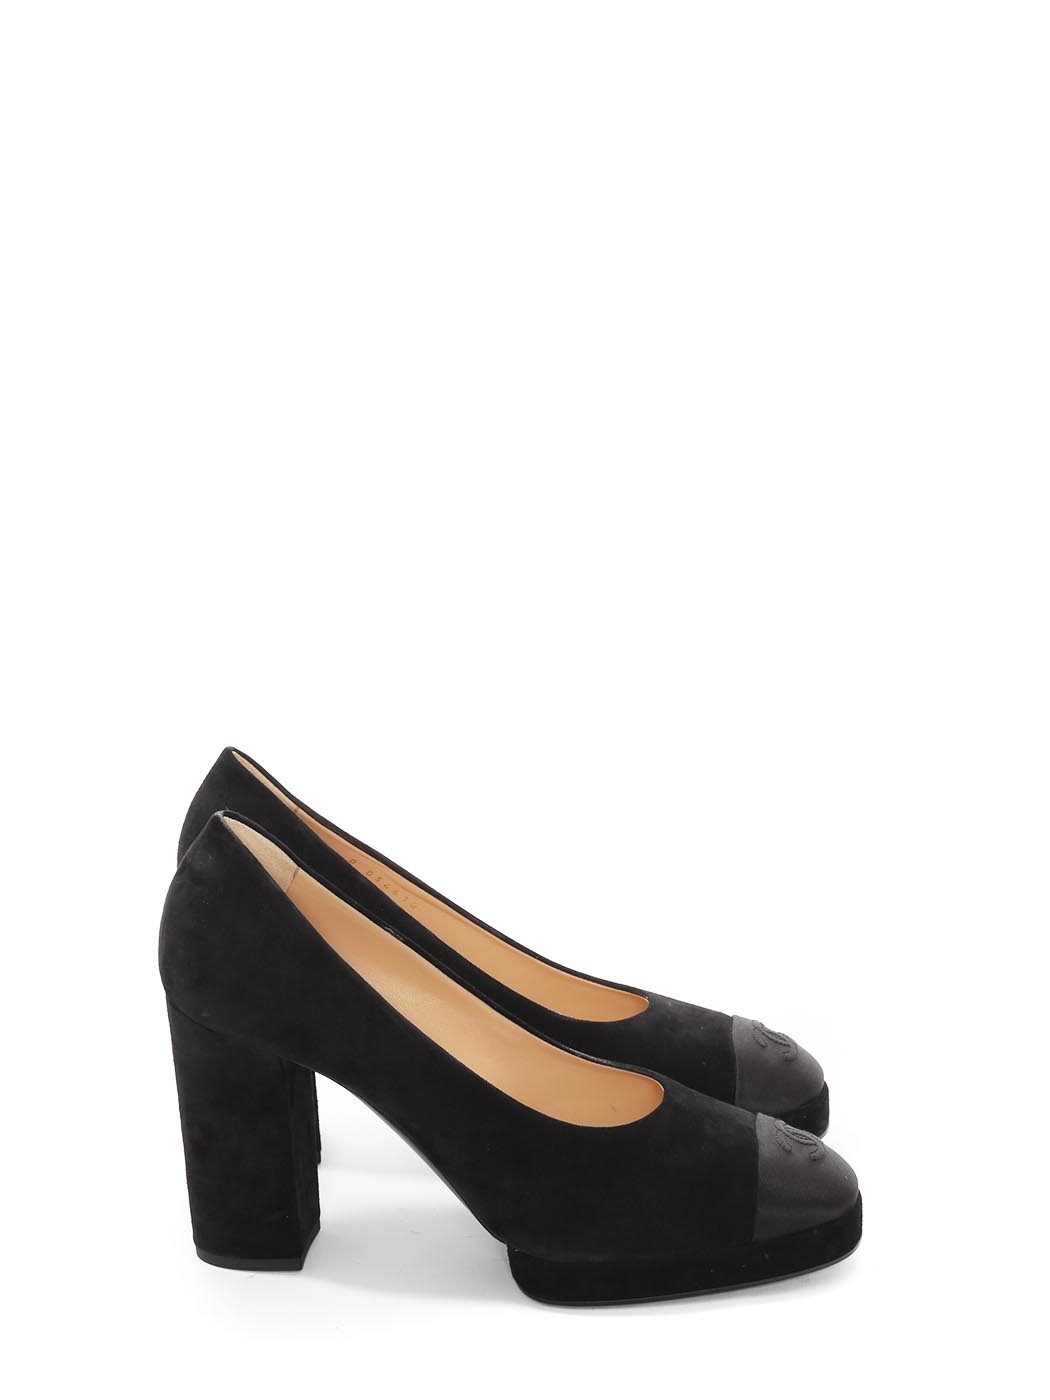 CHANEL, Shoes, Chanel Black Satin Espadrilles Size 38